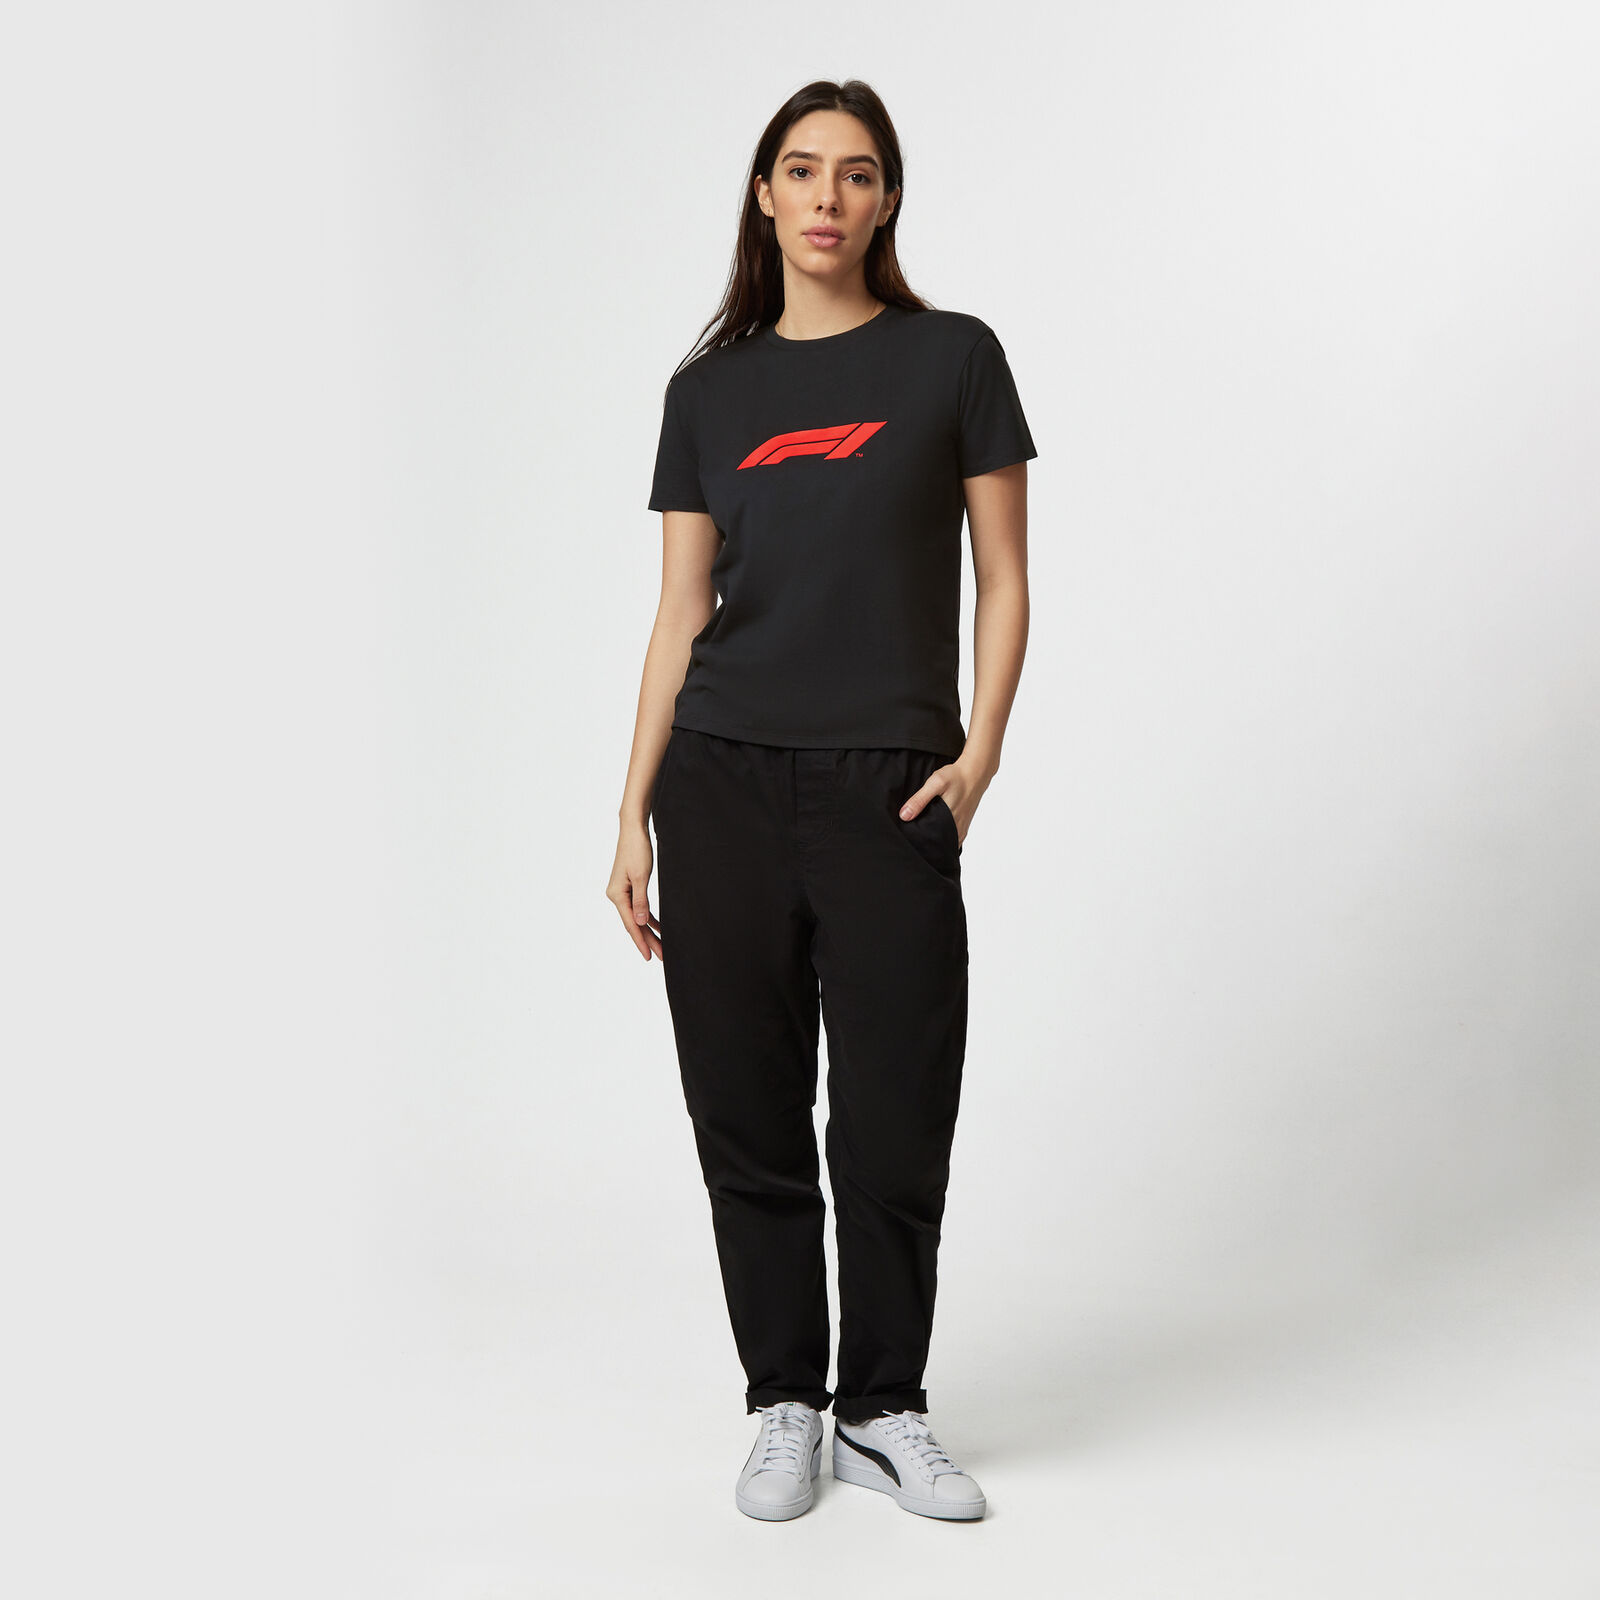 Camiseta para mujer con logotipo - F1 Collection